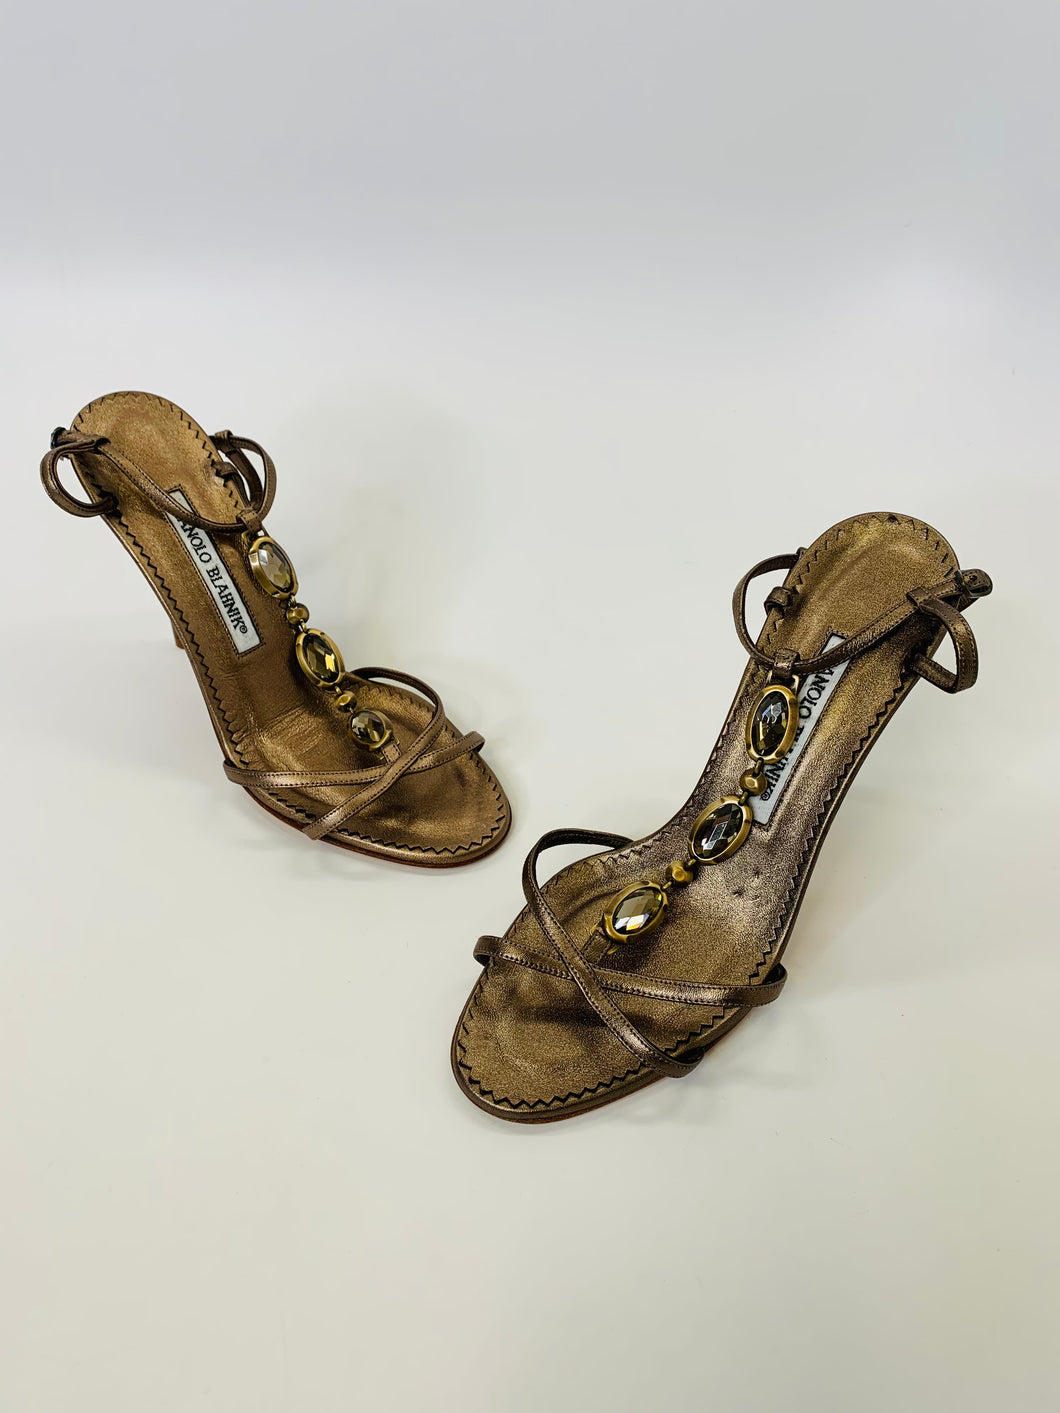 Manolo Blahnik Bronze Leather Jeweled Sandals Size 36 1/2